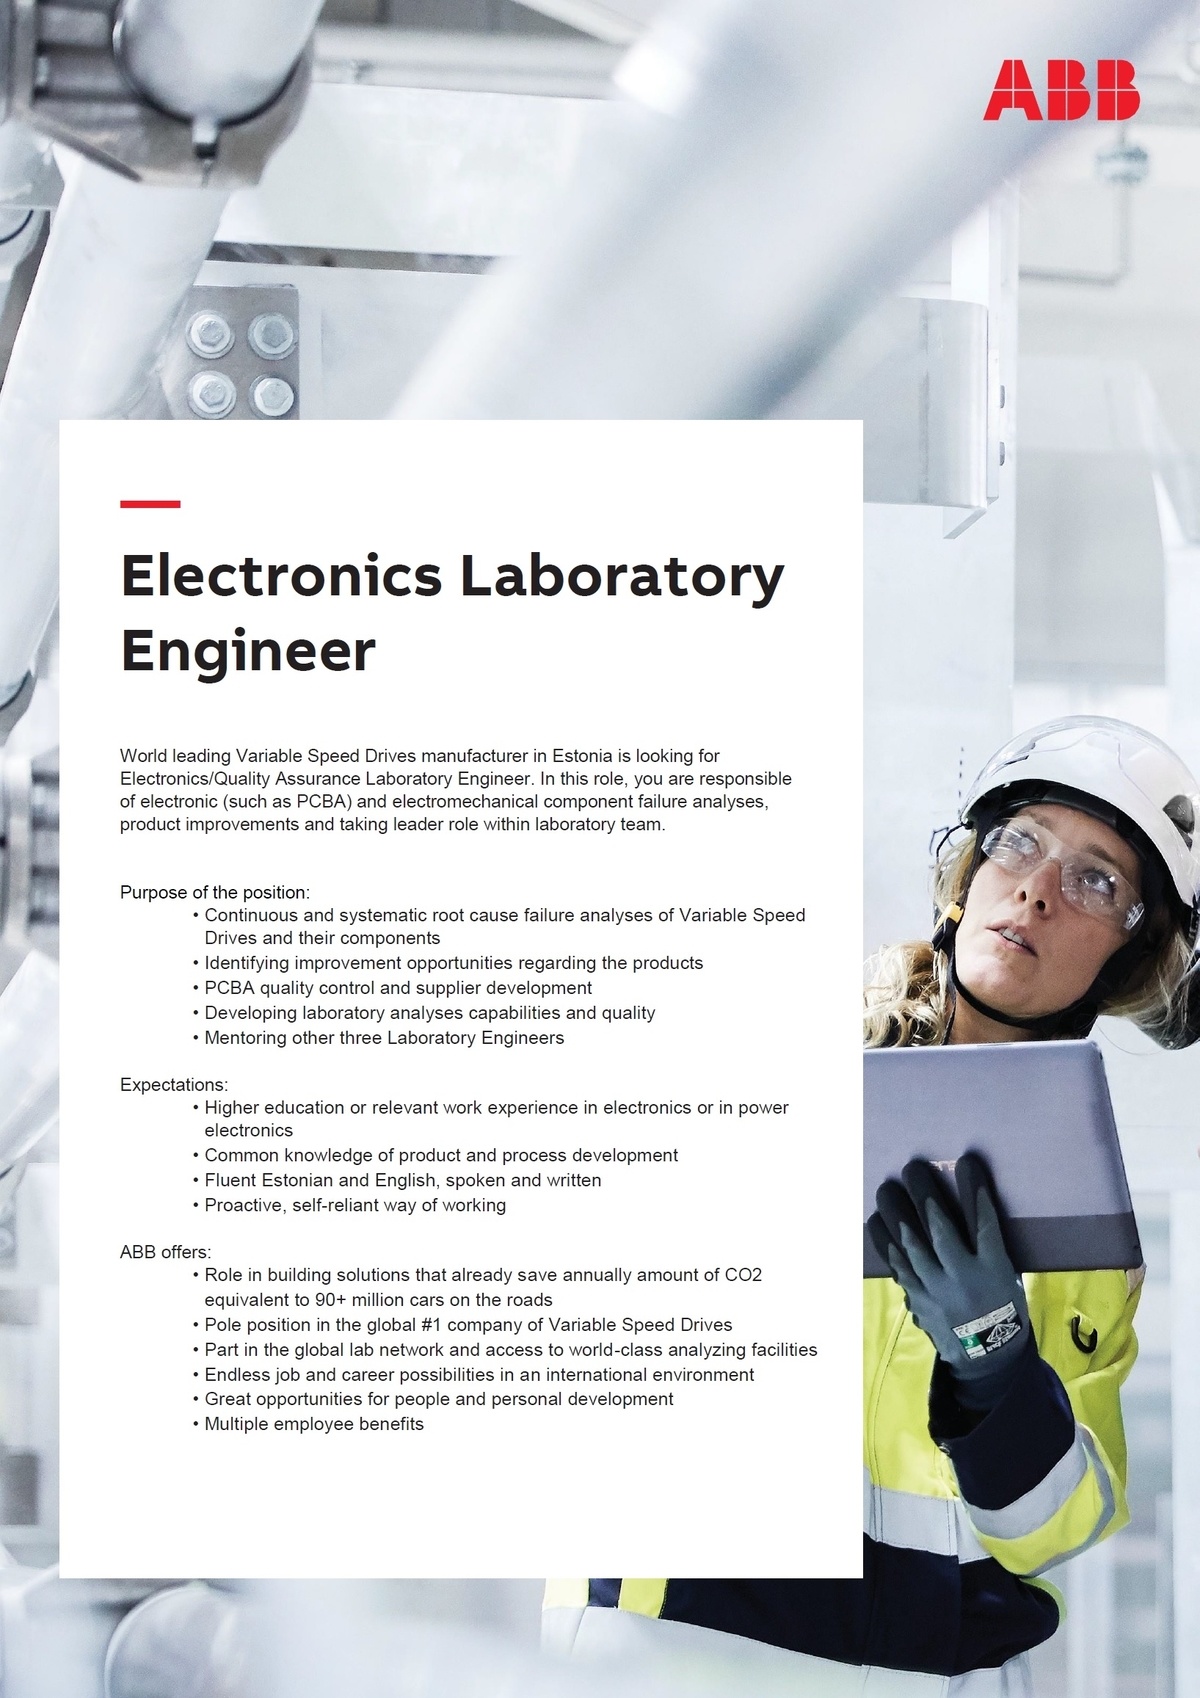 ABB AS Electronics Laboratory Engineer